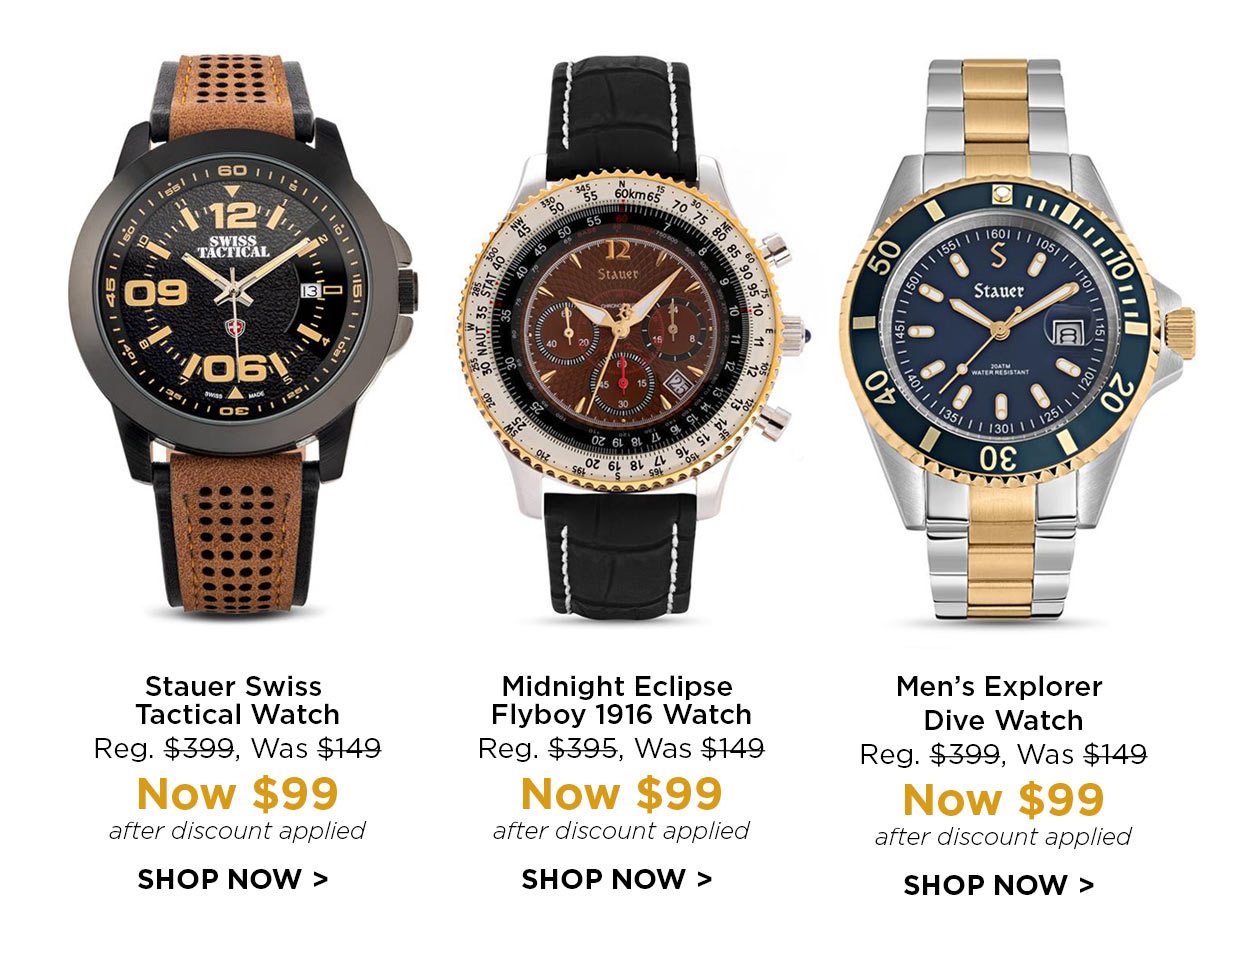 Stauer Swiss Tactical Watch Reg. $399, Was $149, Now $99 after discount applied. Midnight Eclipse Flyboy 1916 Watch Reg. $395, Was $149, Now $99 after discount applied. Men's Explorer Dive Watch Reg. $399, Was $149, Now $99 after discount applied.